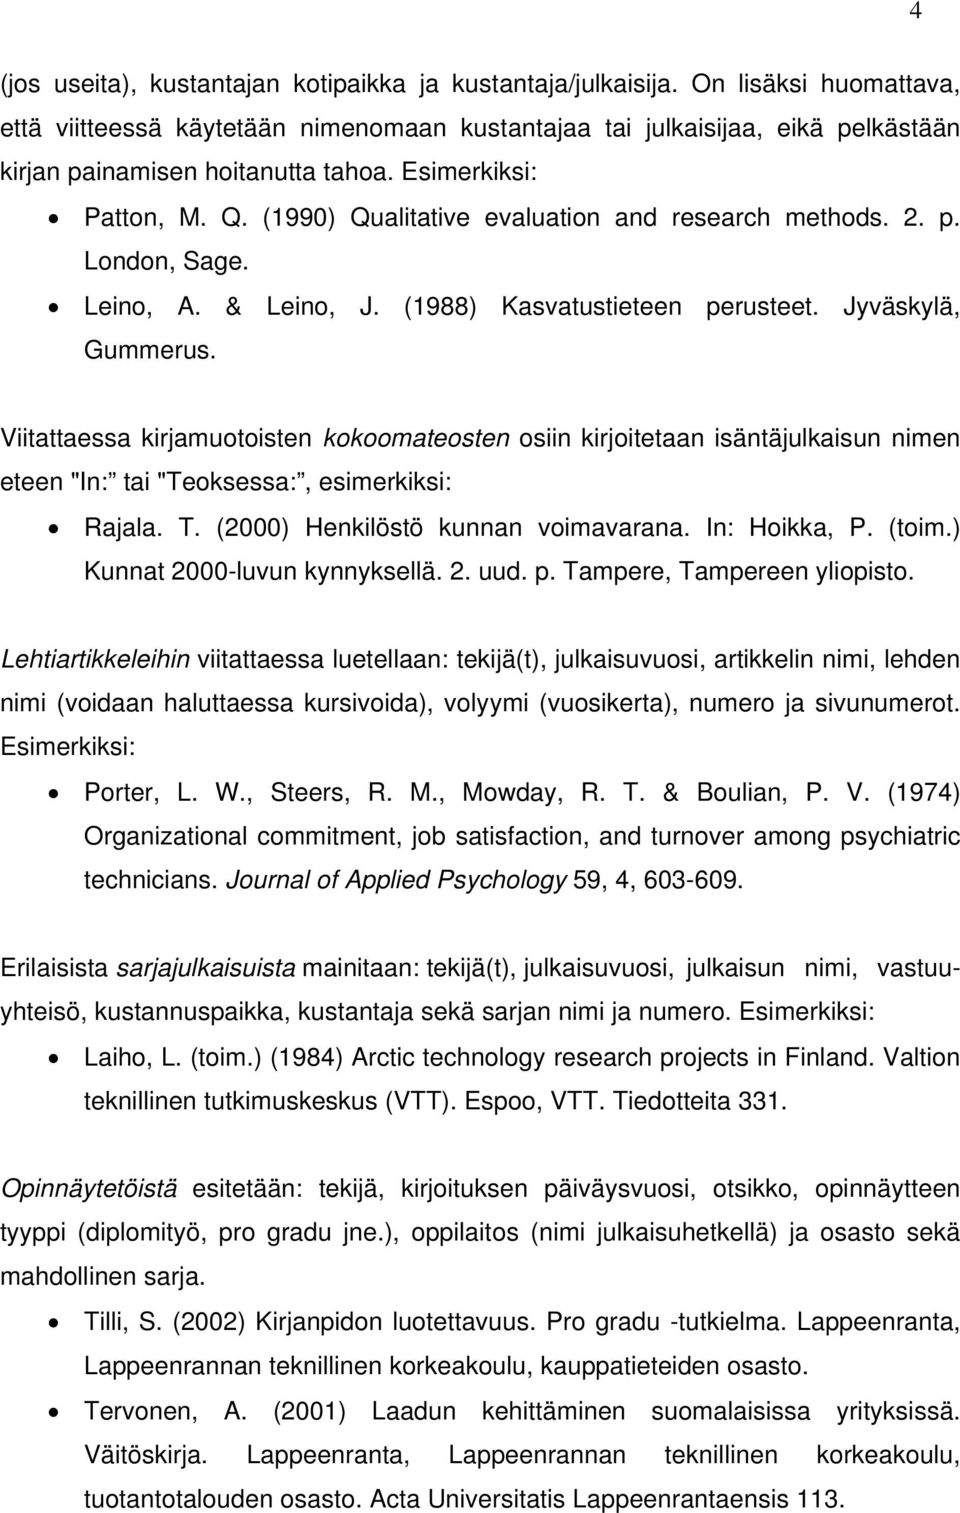 (1990) Qualitative evaluation and research methods. 2. p. London, Sage. Leino, A. & Leino, J. (1988) Kasvatustieteen perusteet. Jyväskylä, Gummerus.